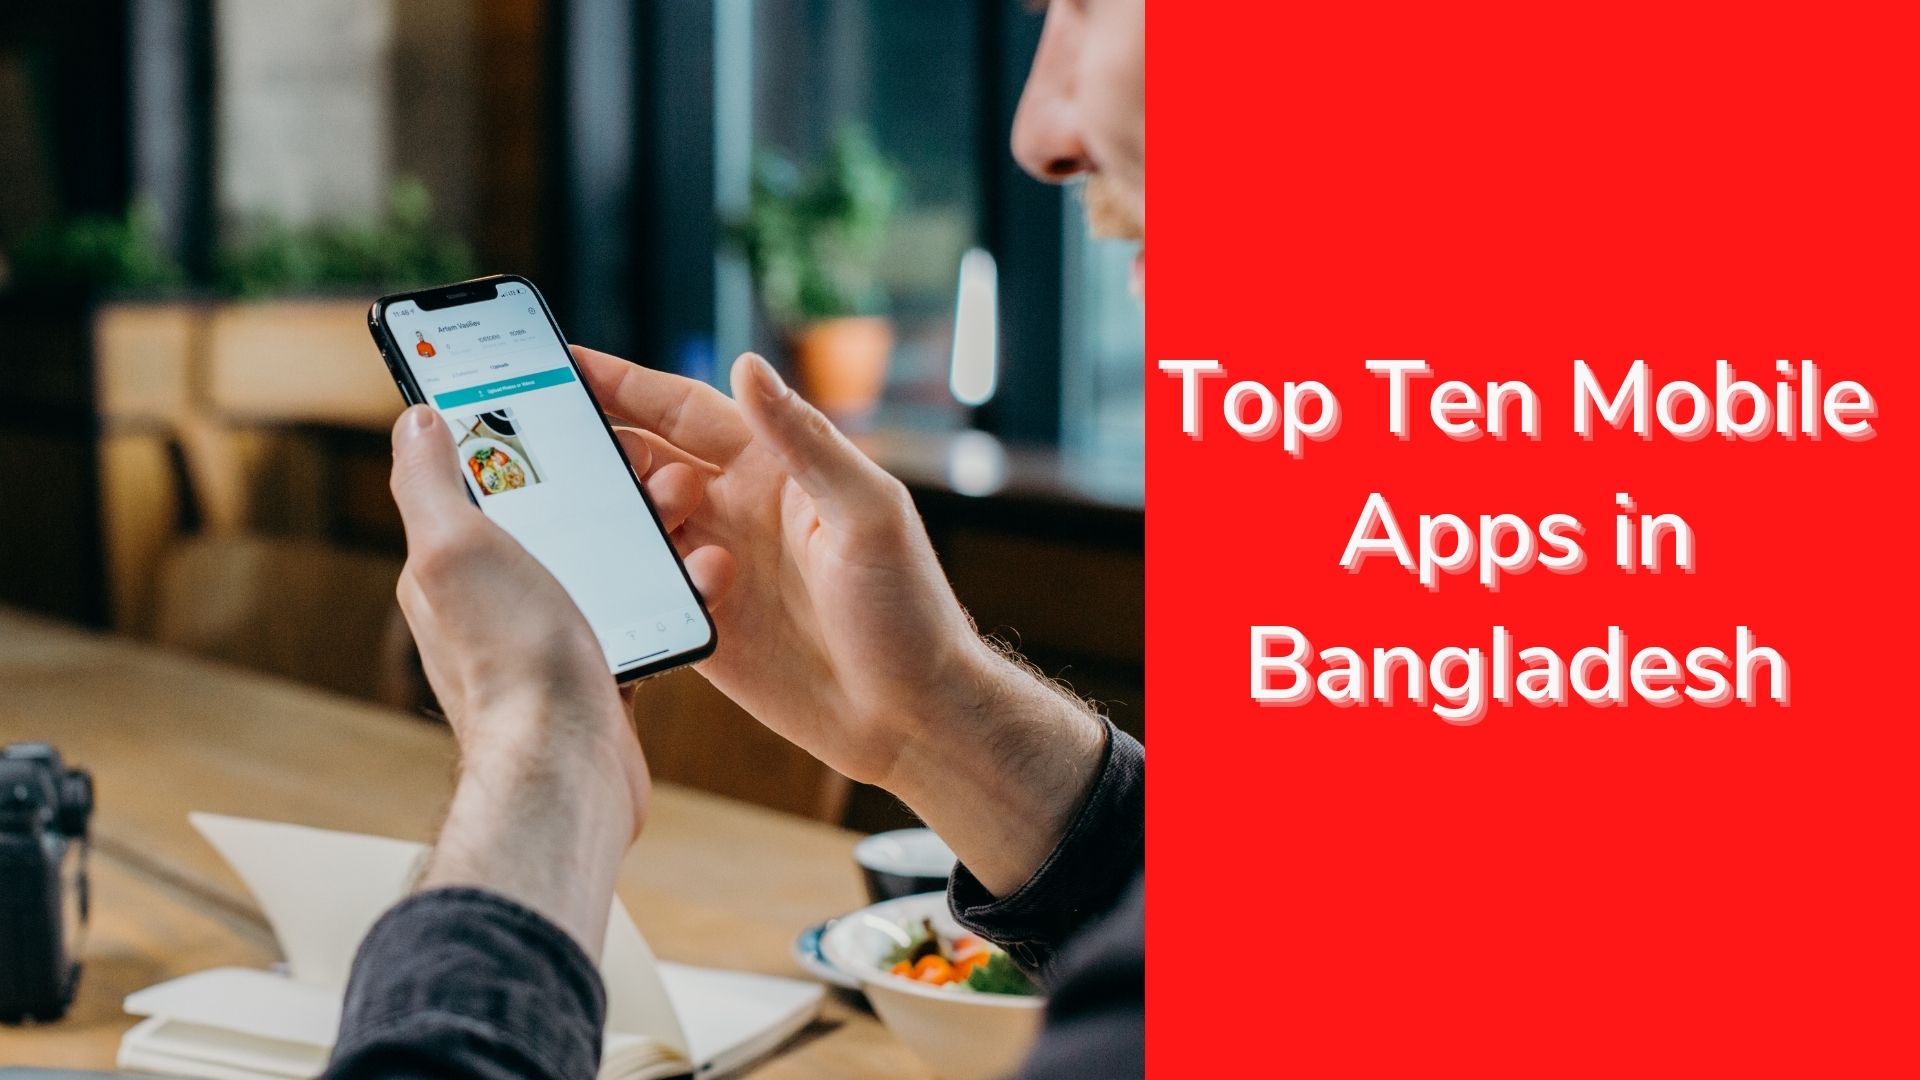 Top Ten Mobile Apps in Bangladesh